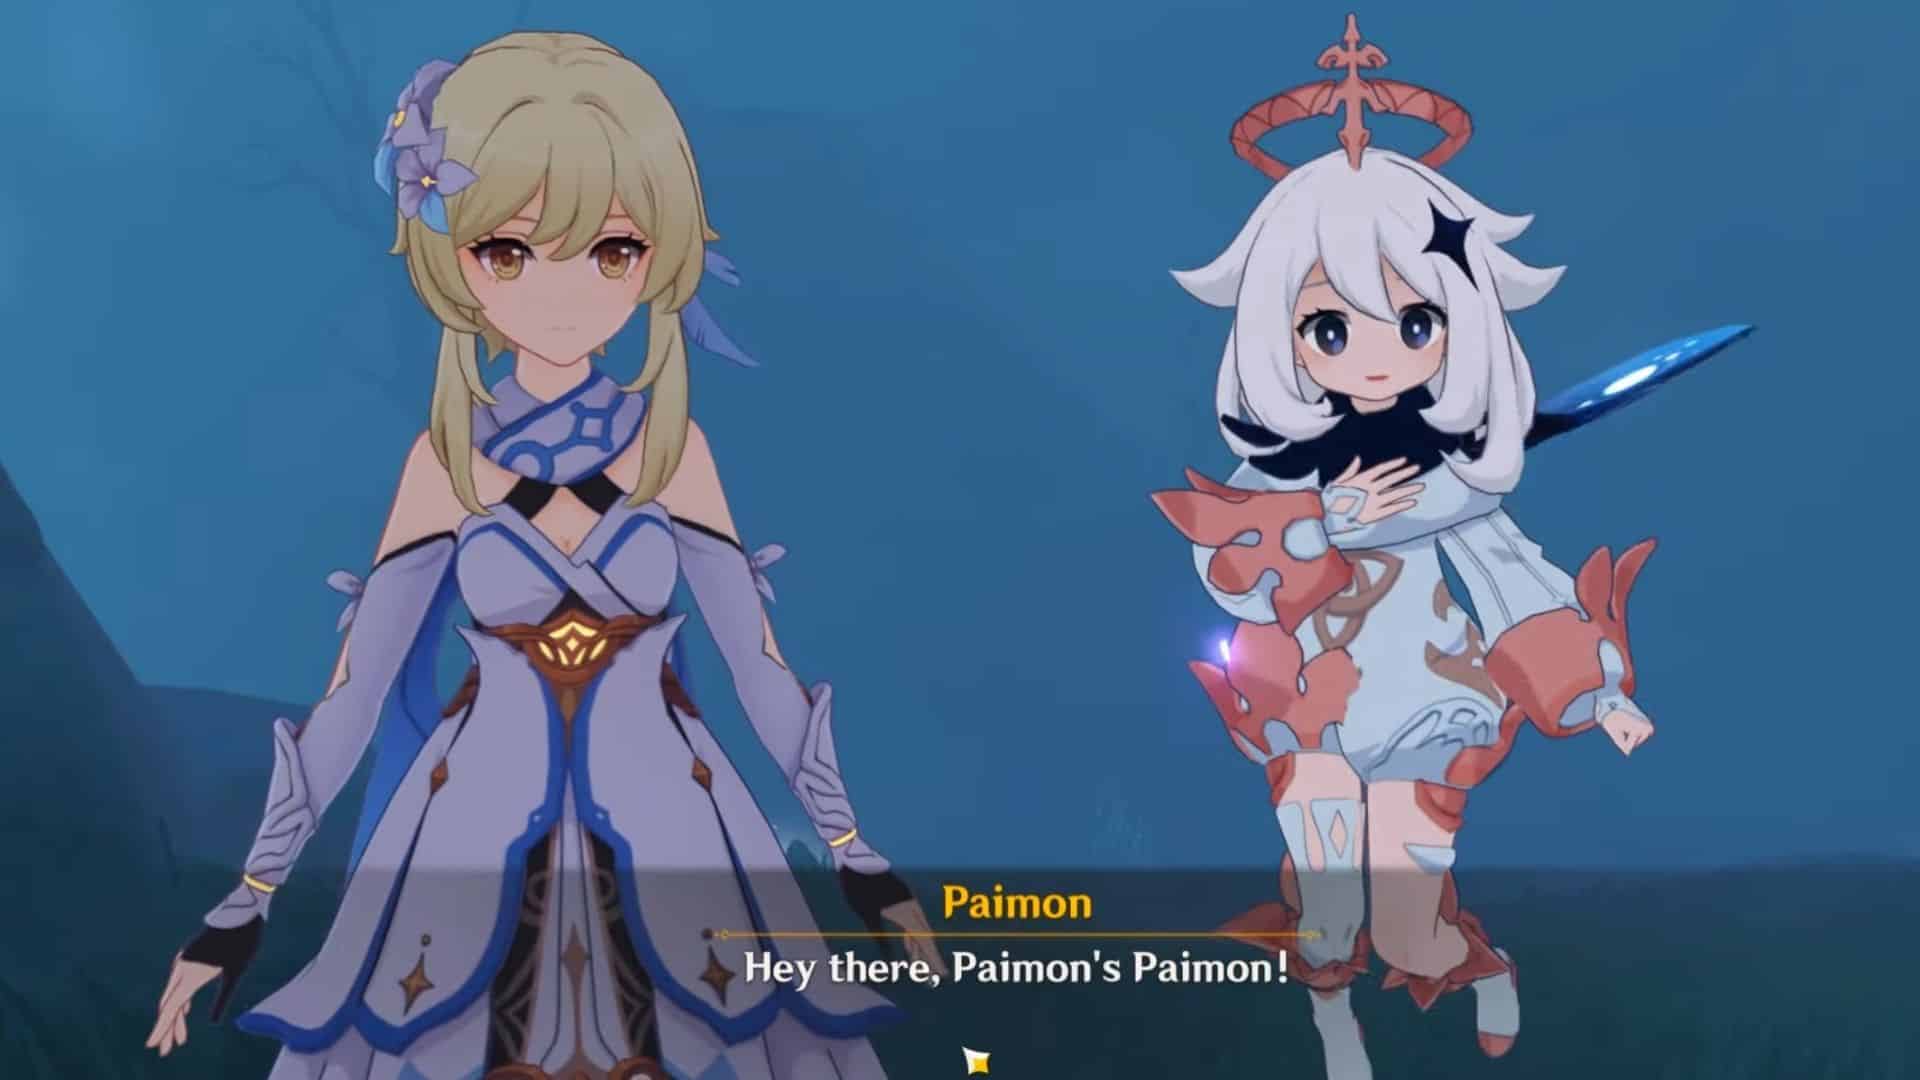 Lumine standing next to Paimon